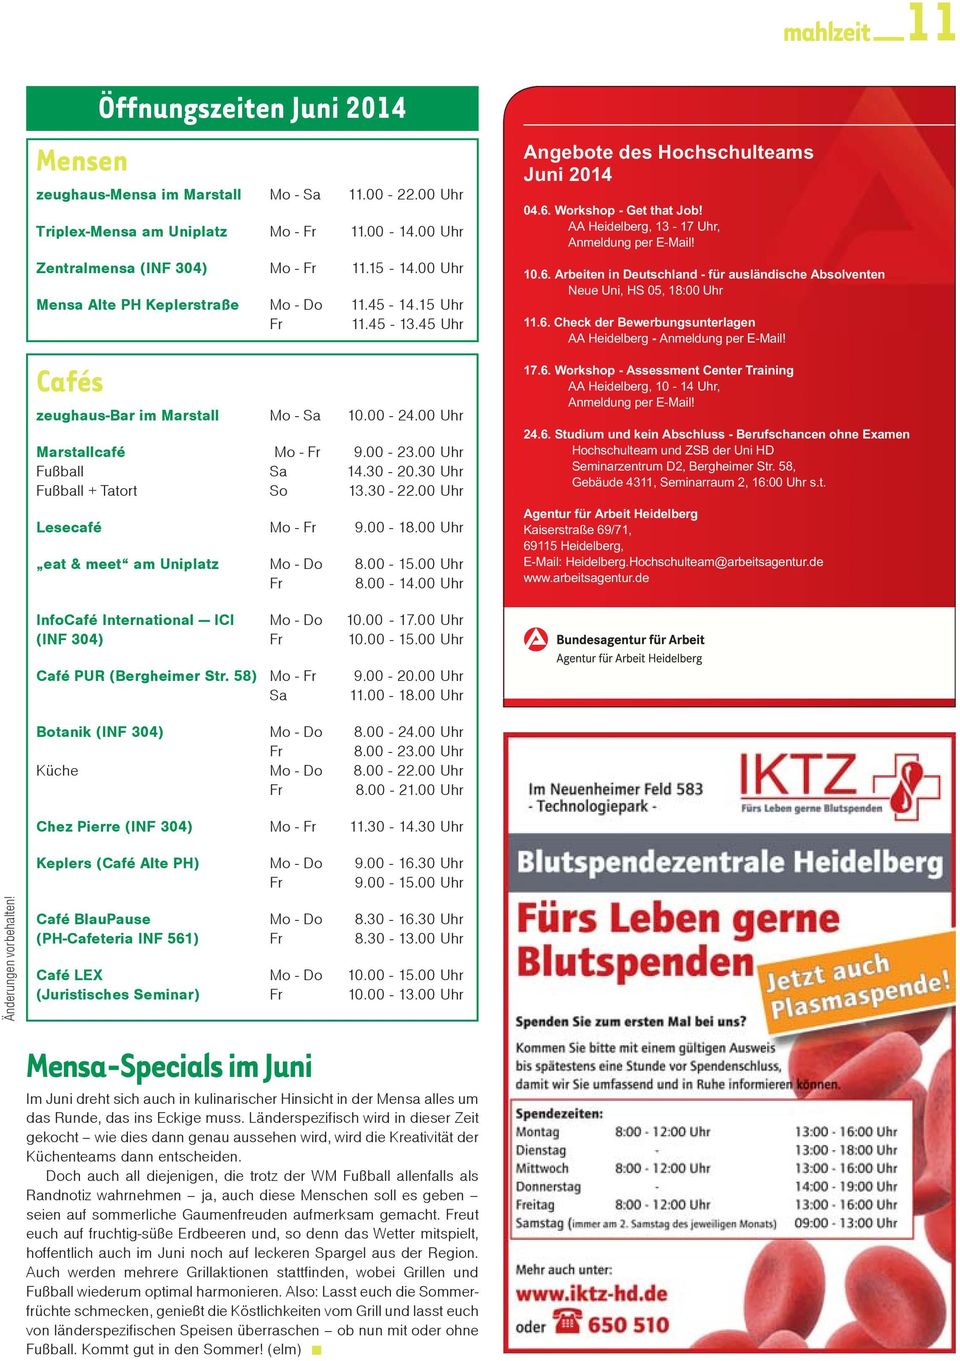 30 Uhr Fußball + Tatort So 13.30-22.00 Uhr Lesecafé Mo - Fr 9.00-18.00 Uhr eat & meet am Uniplatz Mo - Do 8.00-15.00 Uhr Fr 8.00-14.00 Uhr Angebote des Hochschulteams Juni 2014 04.6.